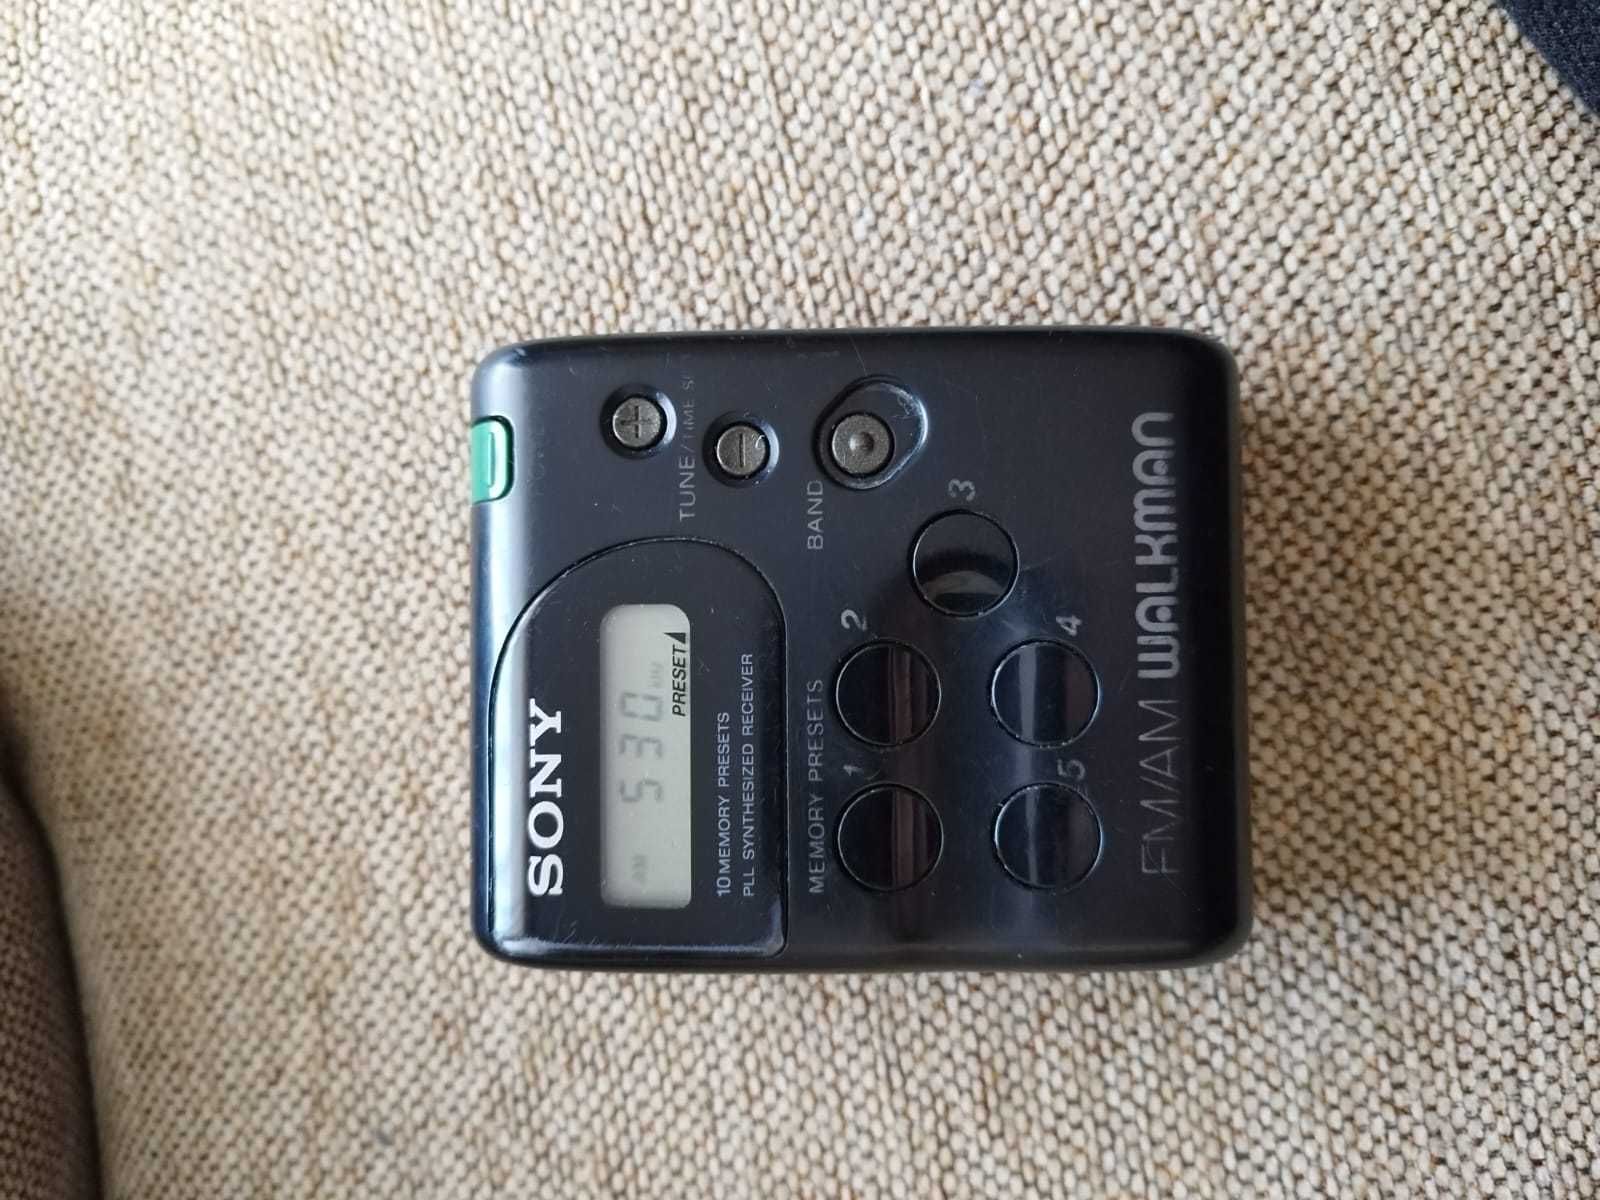 Walkman Sony SRF-M88 radio cu casti AM FM